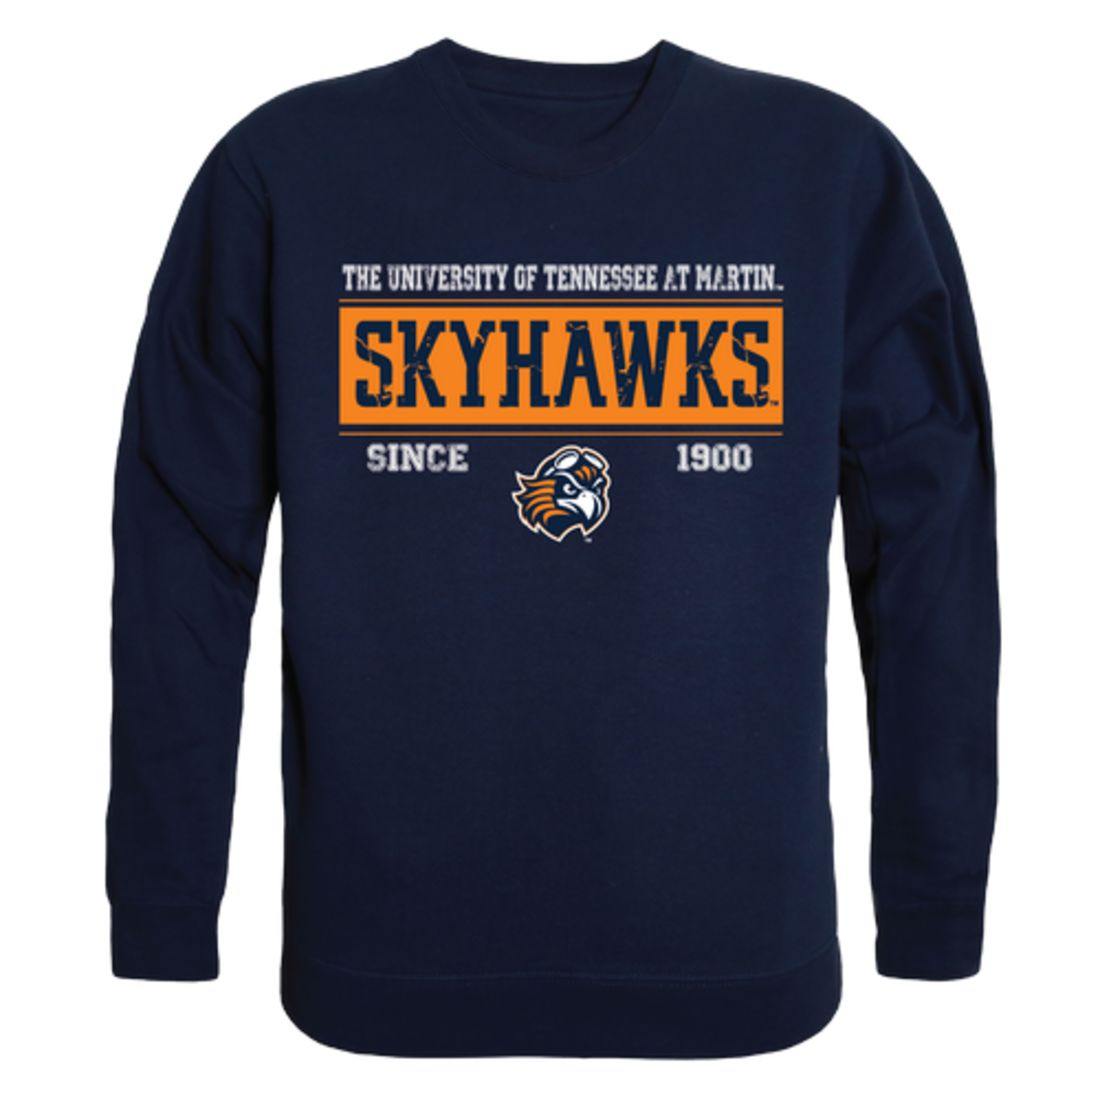 UT University of Tennessee at Martin Skyhawks Established Crewneck Pullover Sweatshirt Sweater Navy-Campus-Wardrobe